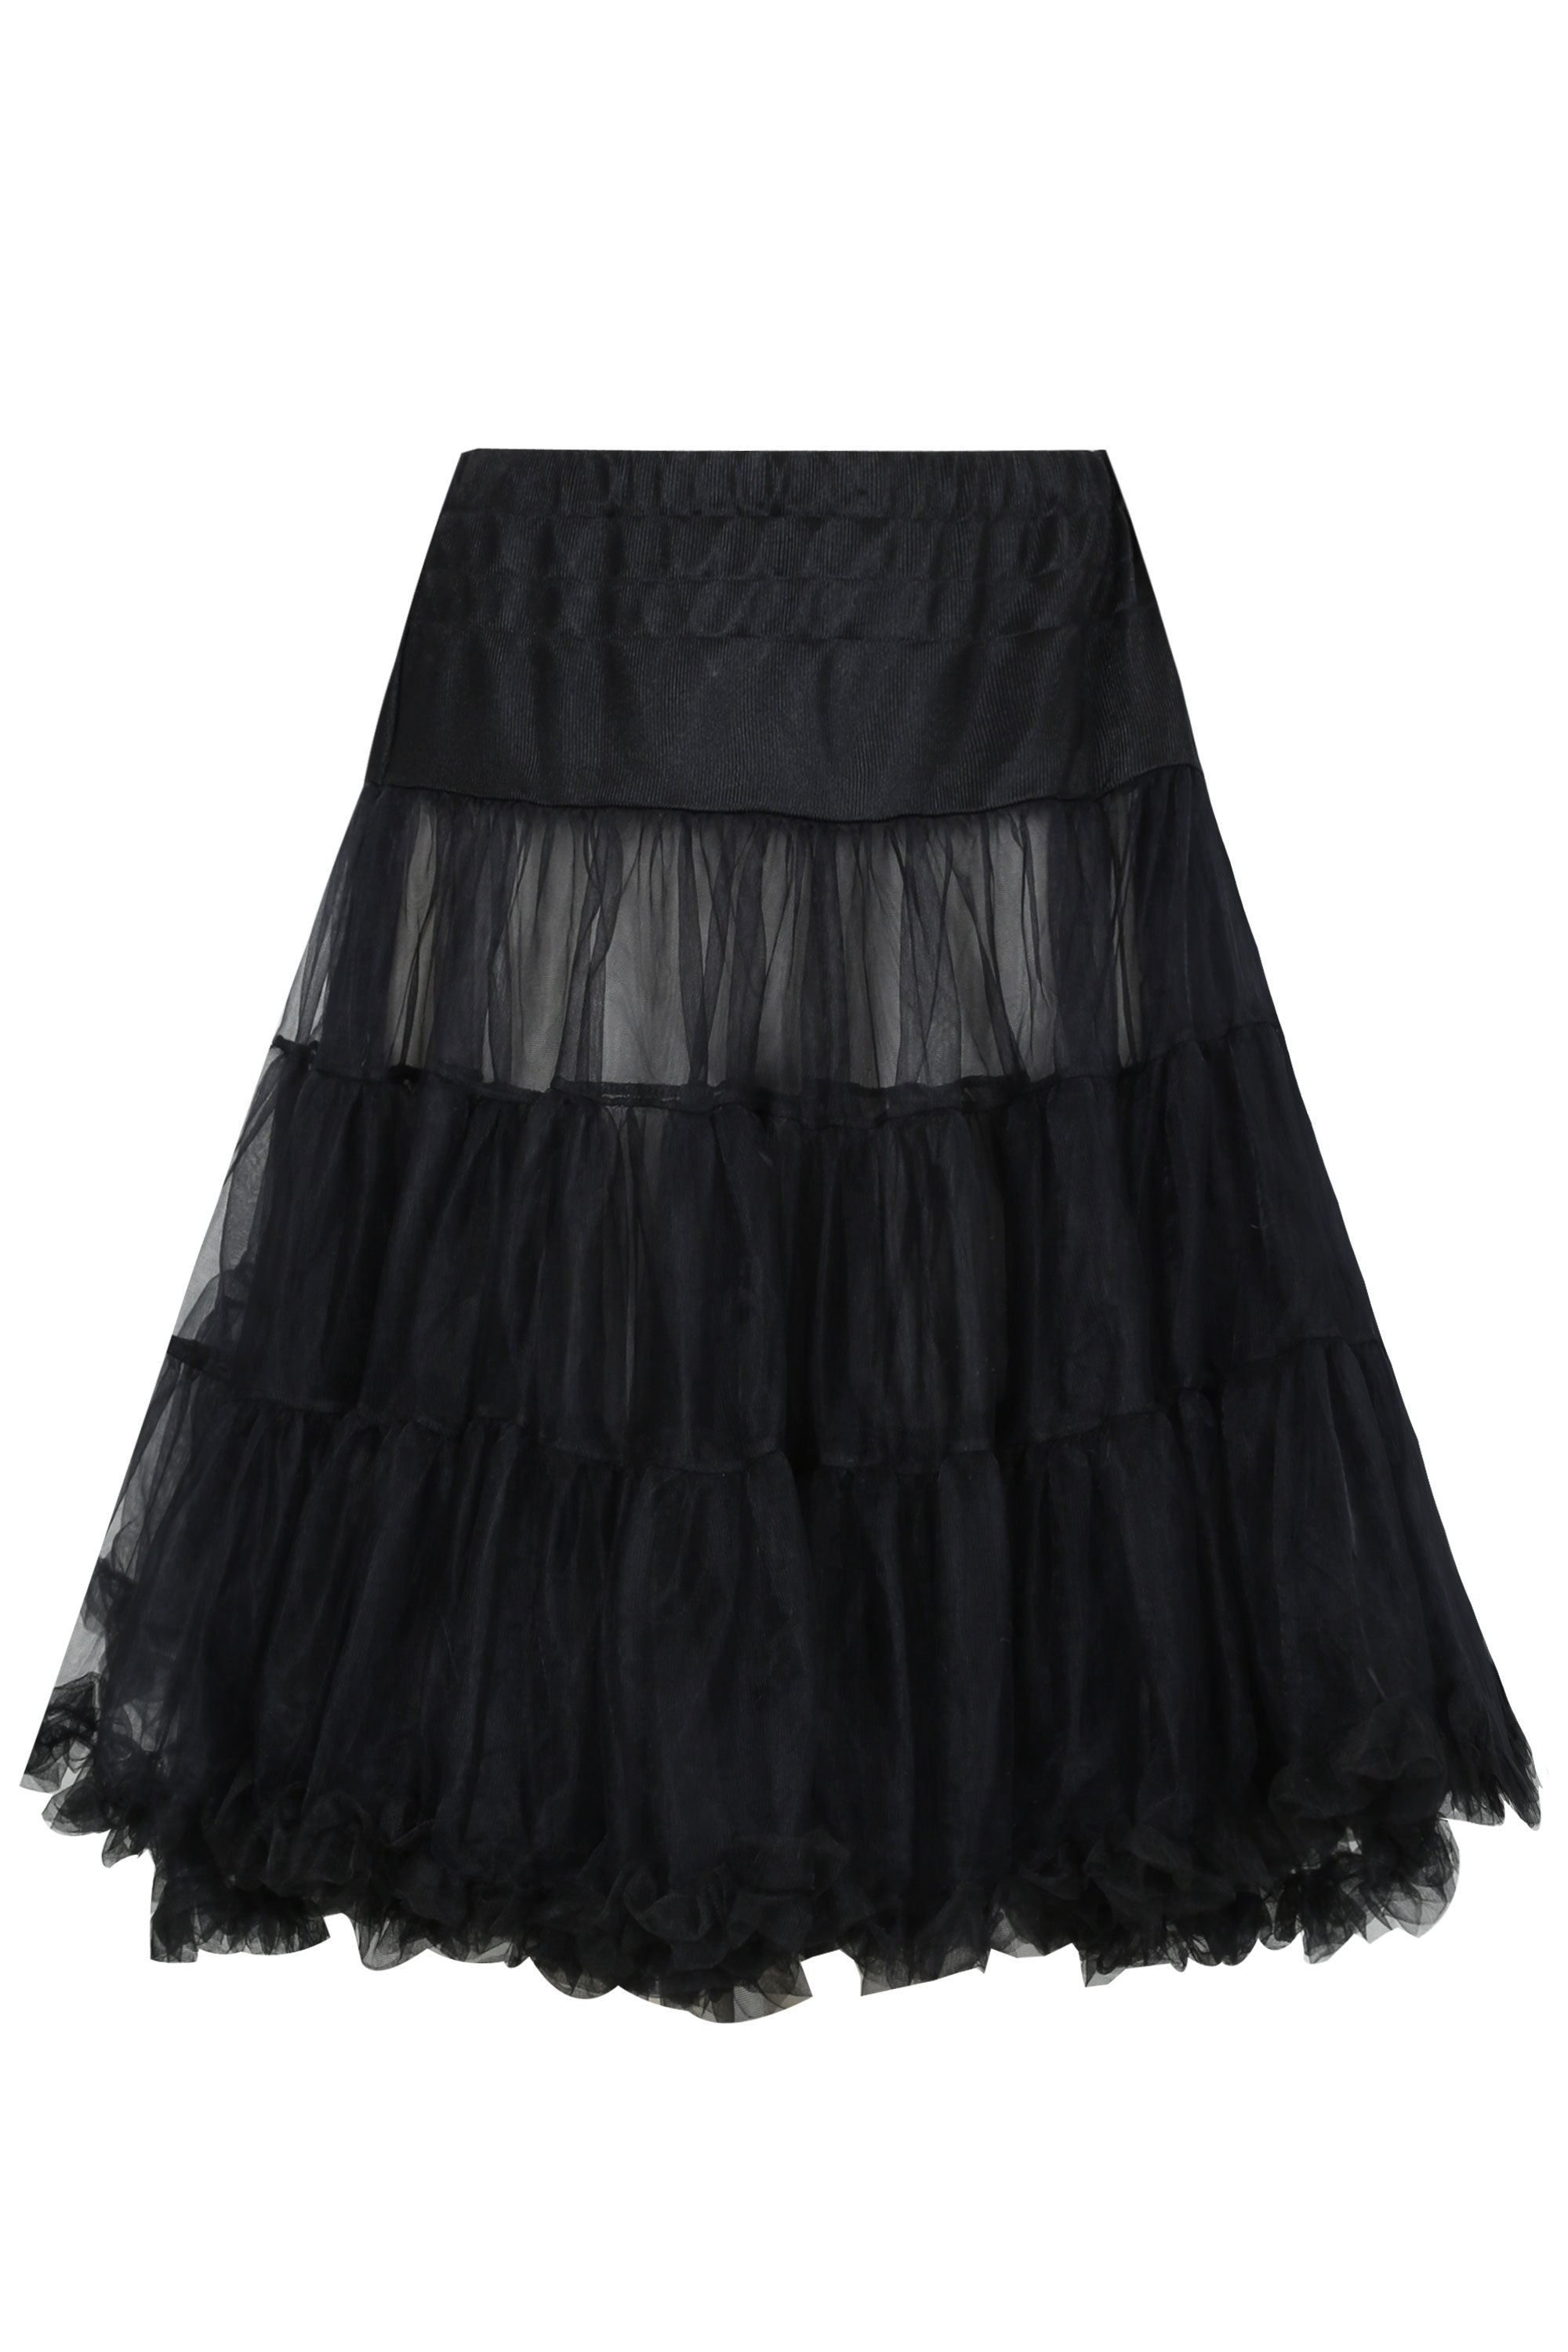 HELL BUNNY Black Petticoat Flare Skirt Plus sizes 14,16,18,20,22,24